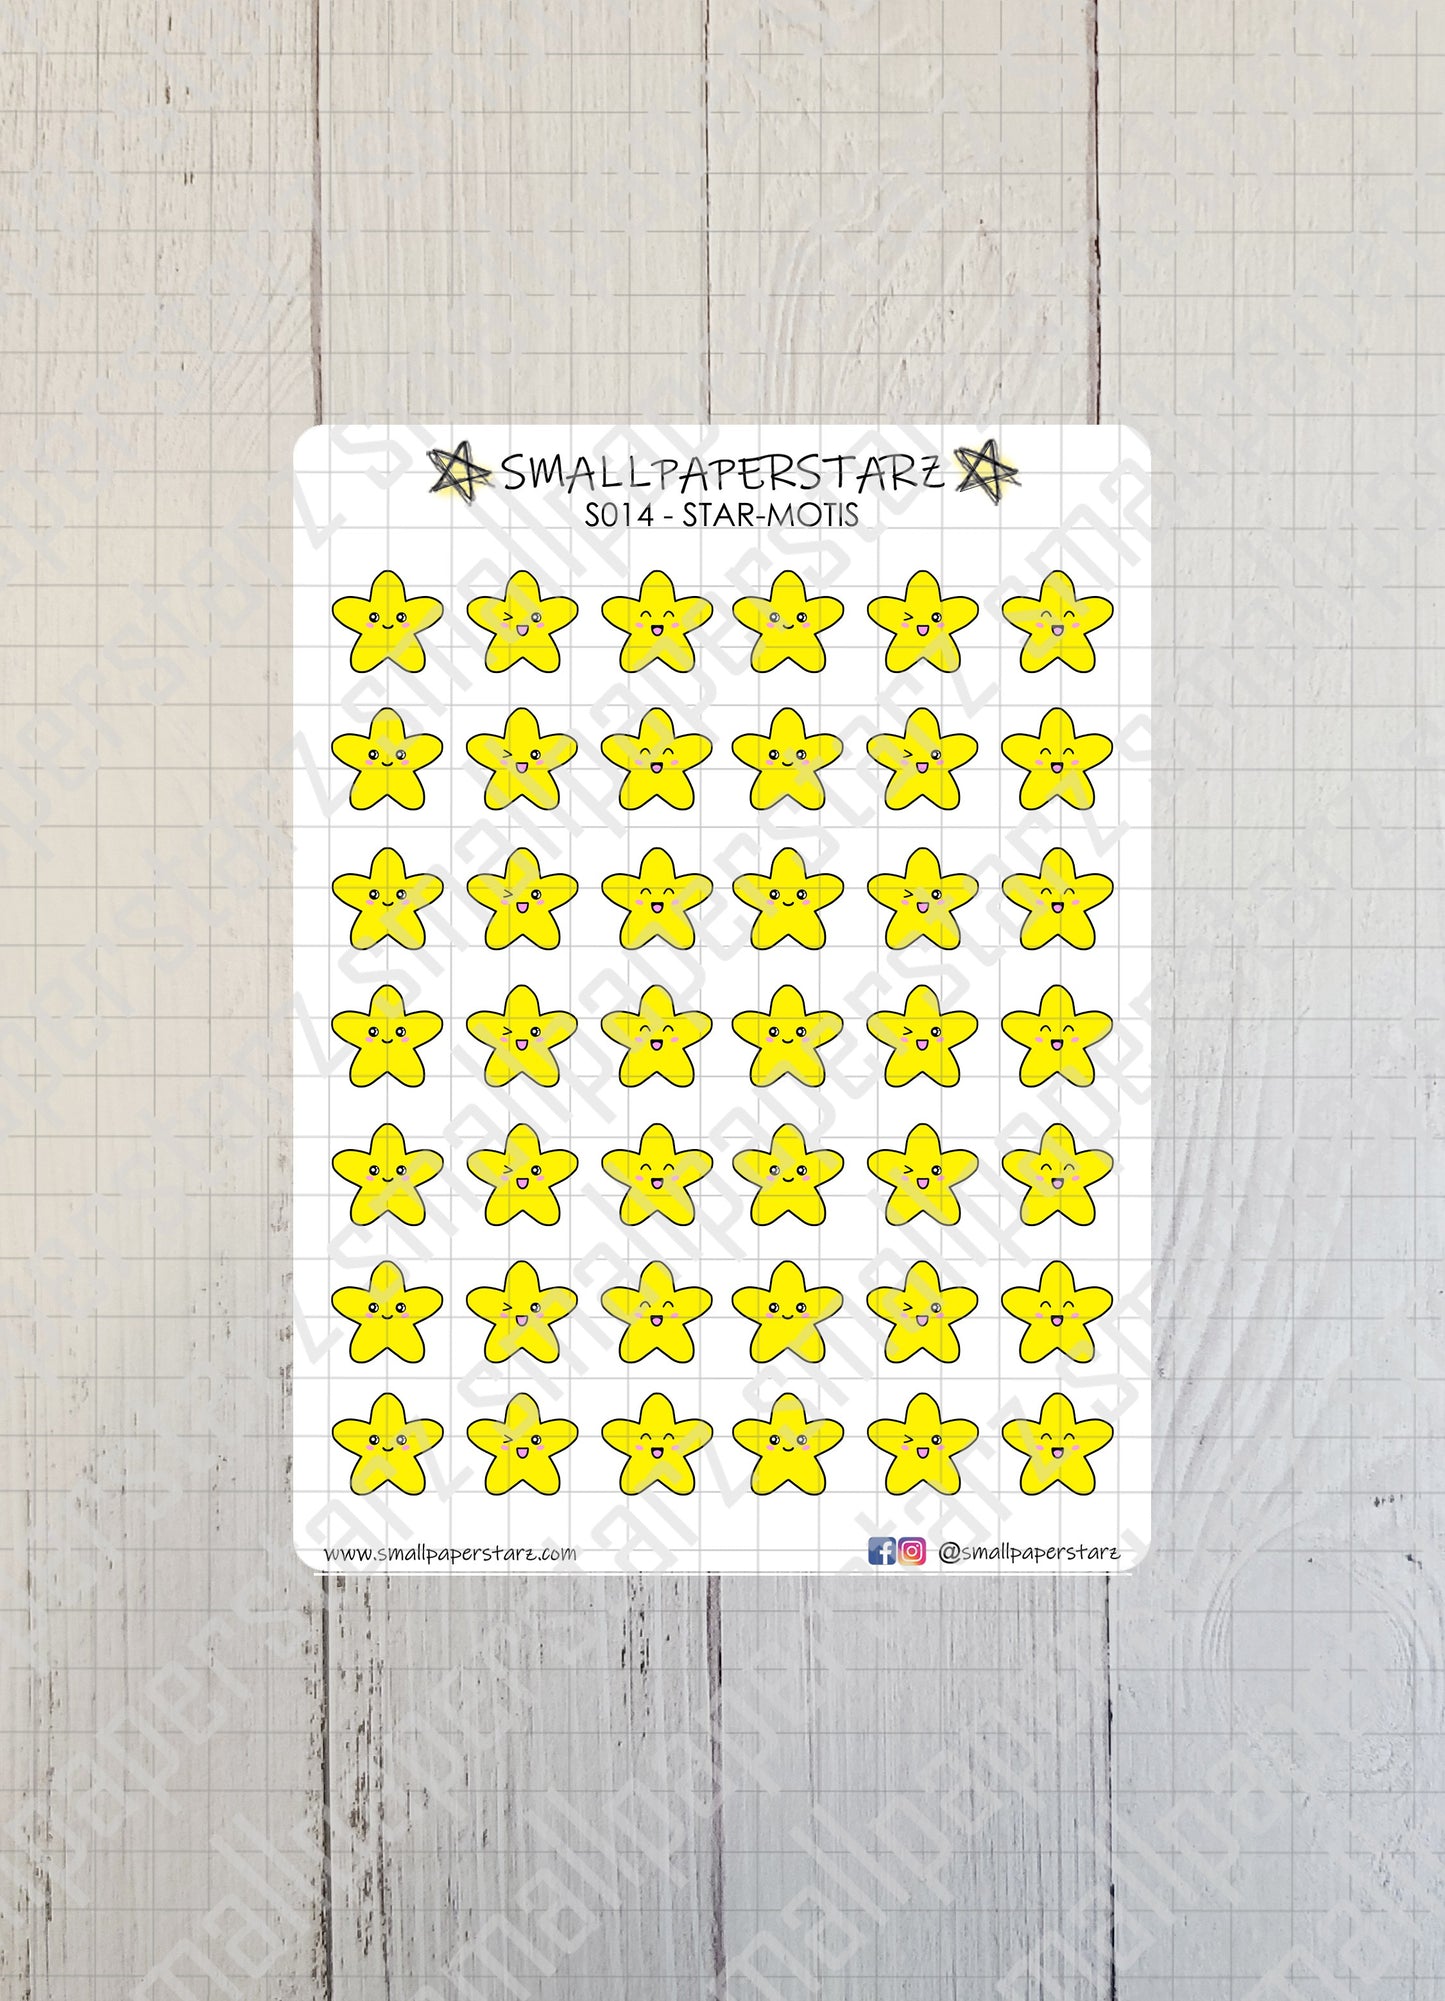 S014 - Star-motis Sticker Sheet